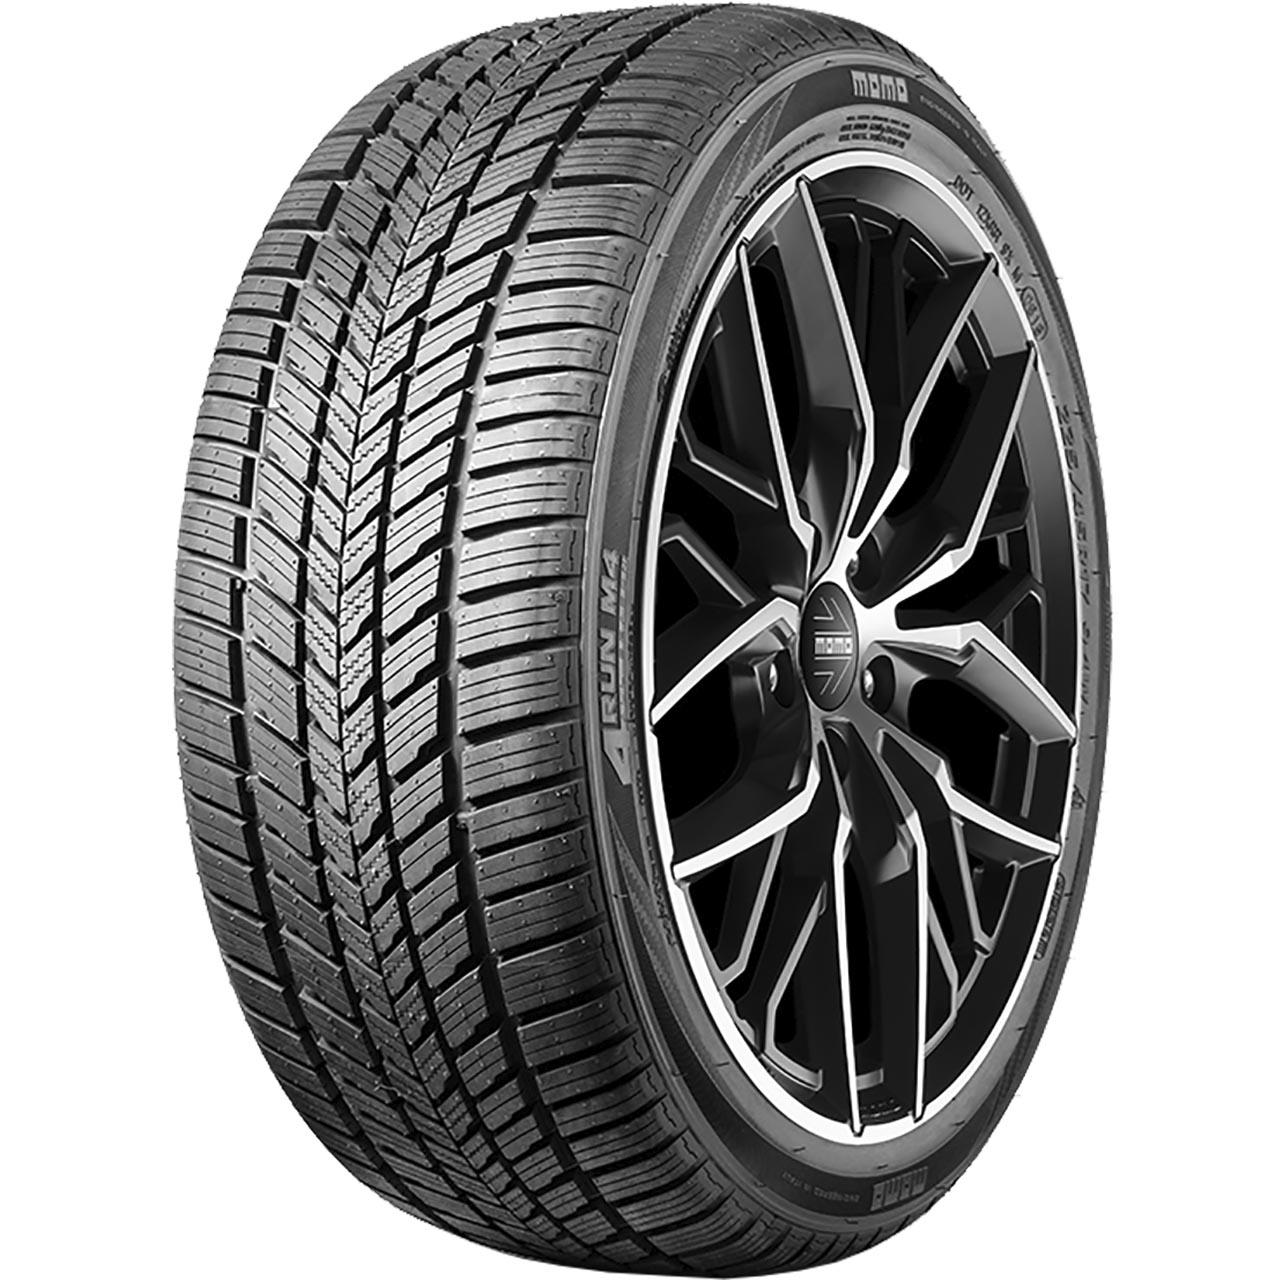 Momo Tire M 4 Four Season 195/65R15 95H XL